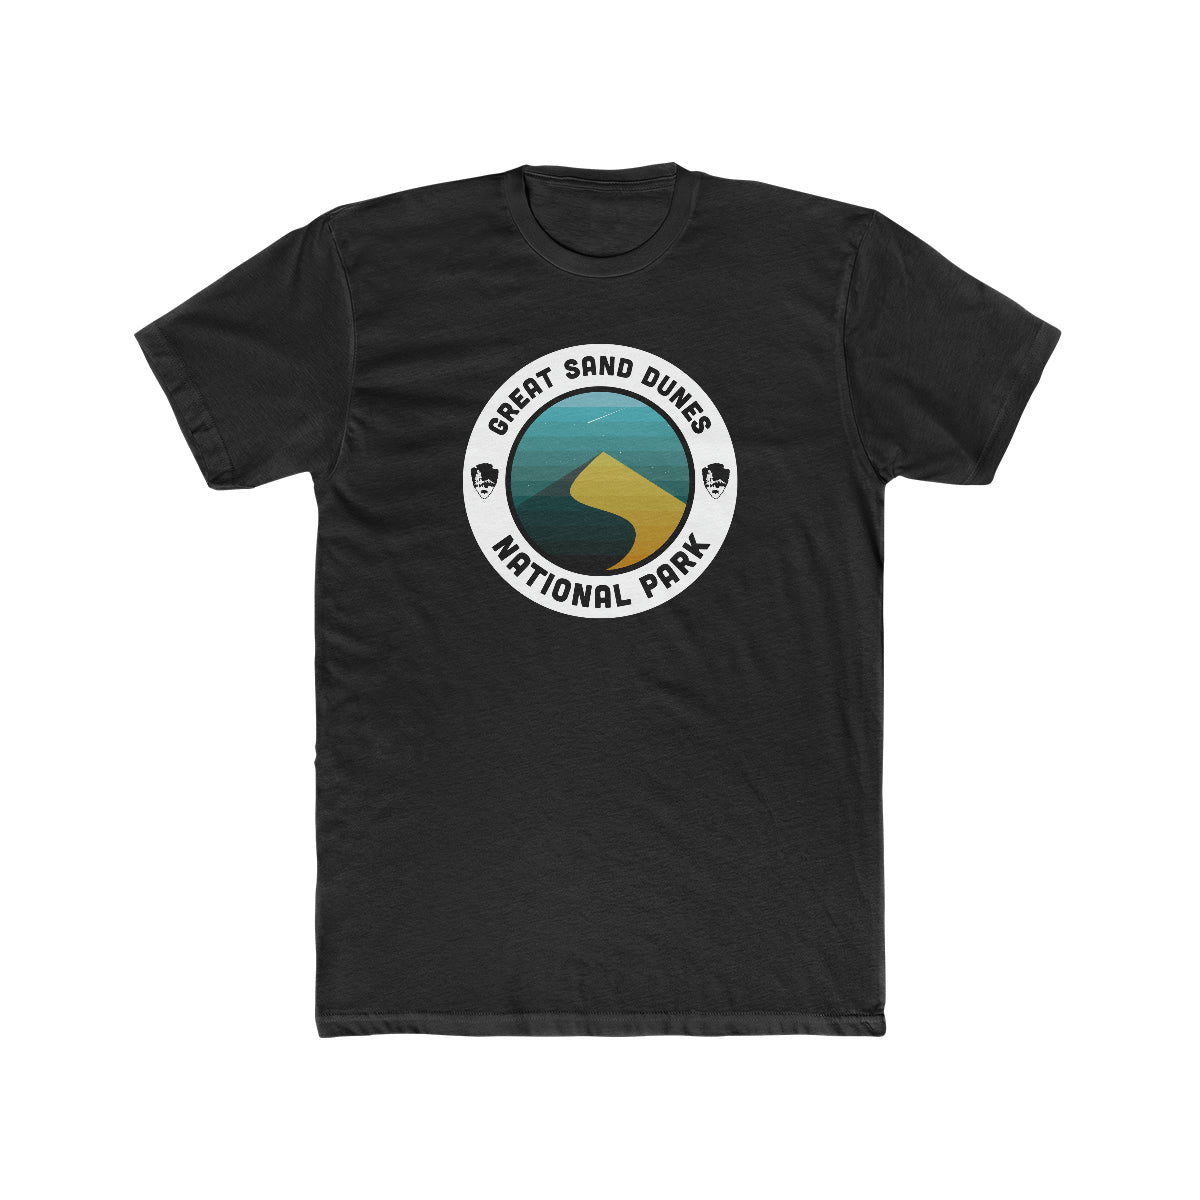 Great Sand Dunes National Park T-Shirt - Round Badge Design